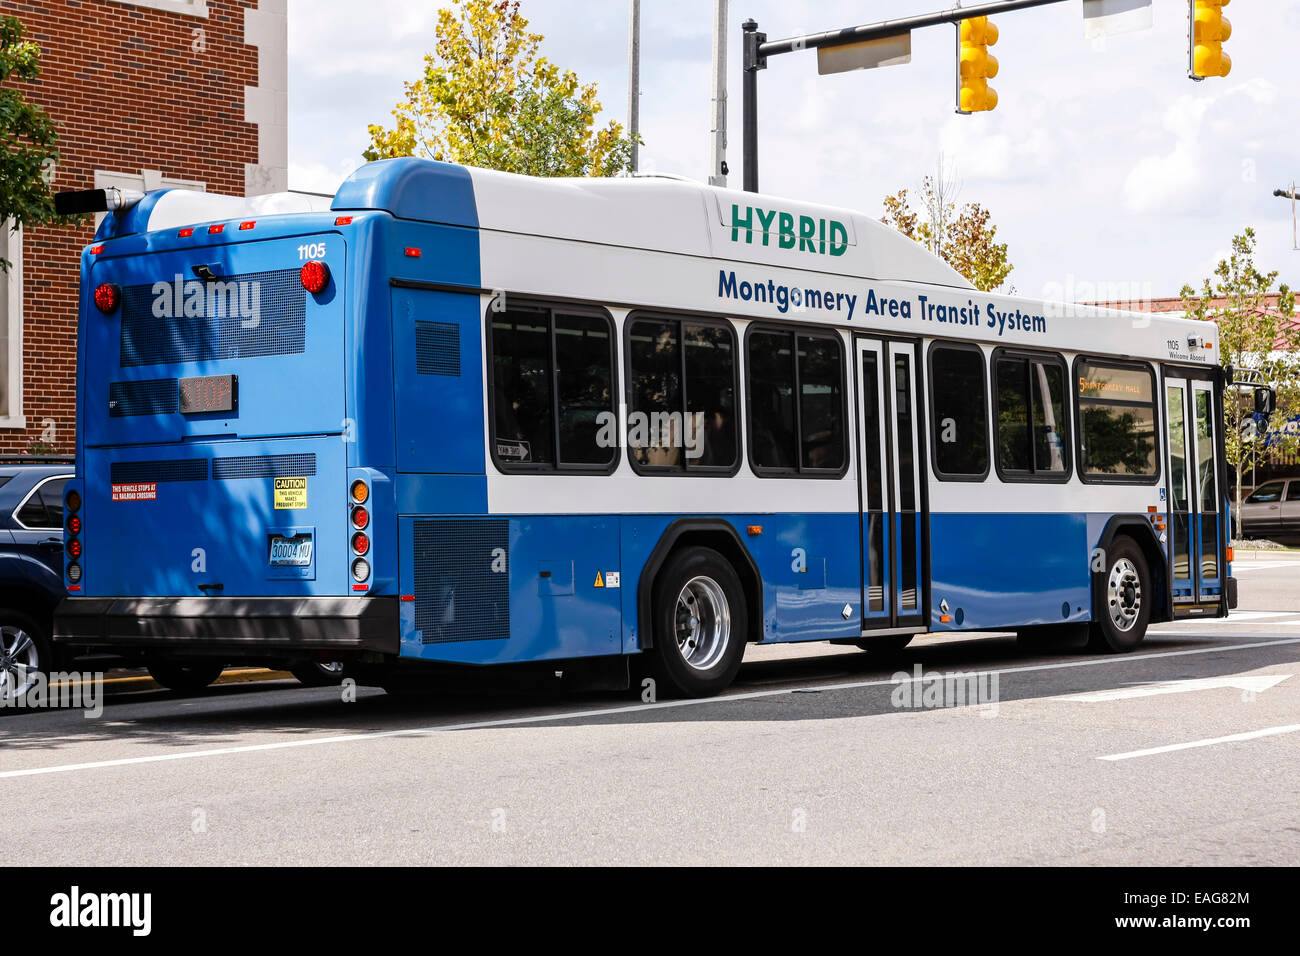 Montgomery Area Transit System hybrid city bus Stock Photo